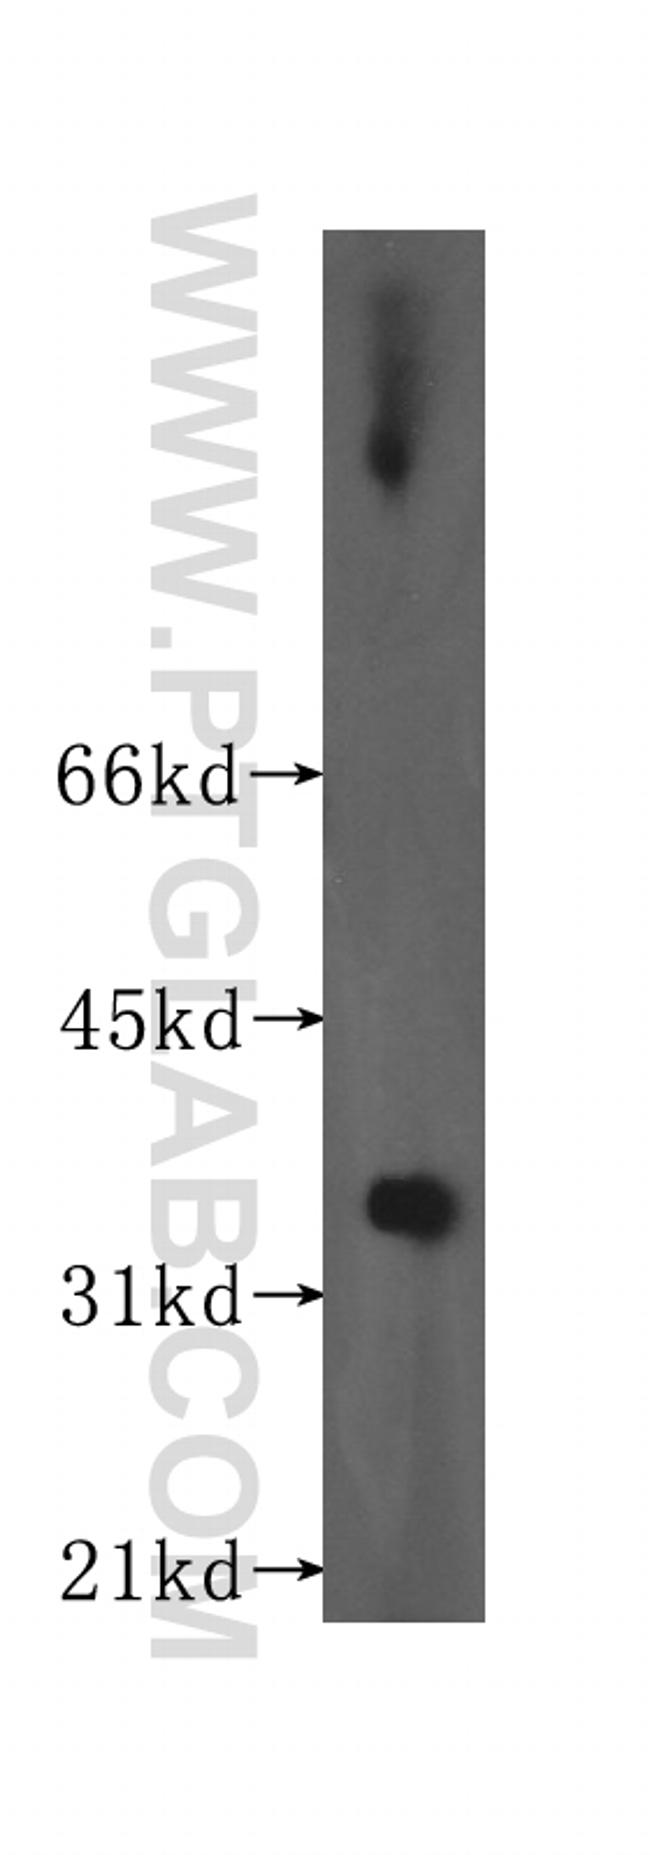 HSD17B8 Antibody in Western Blot (WB)